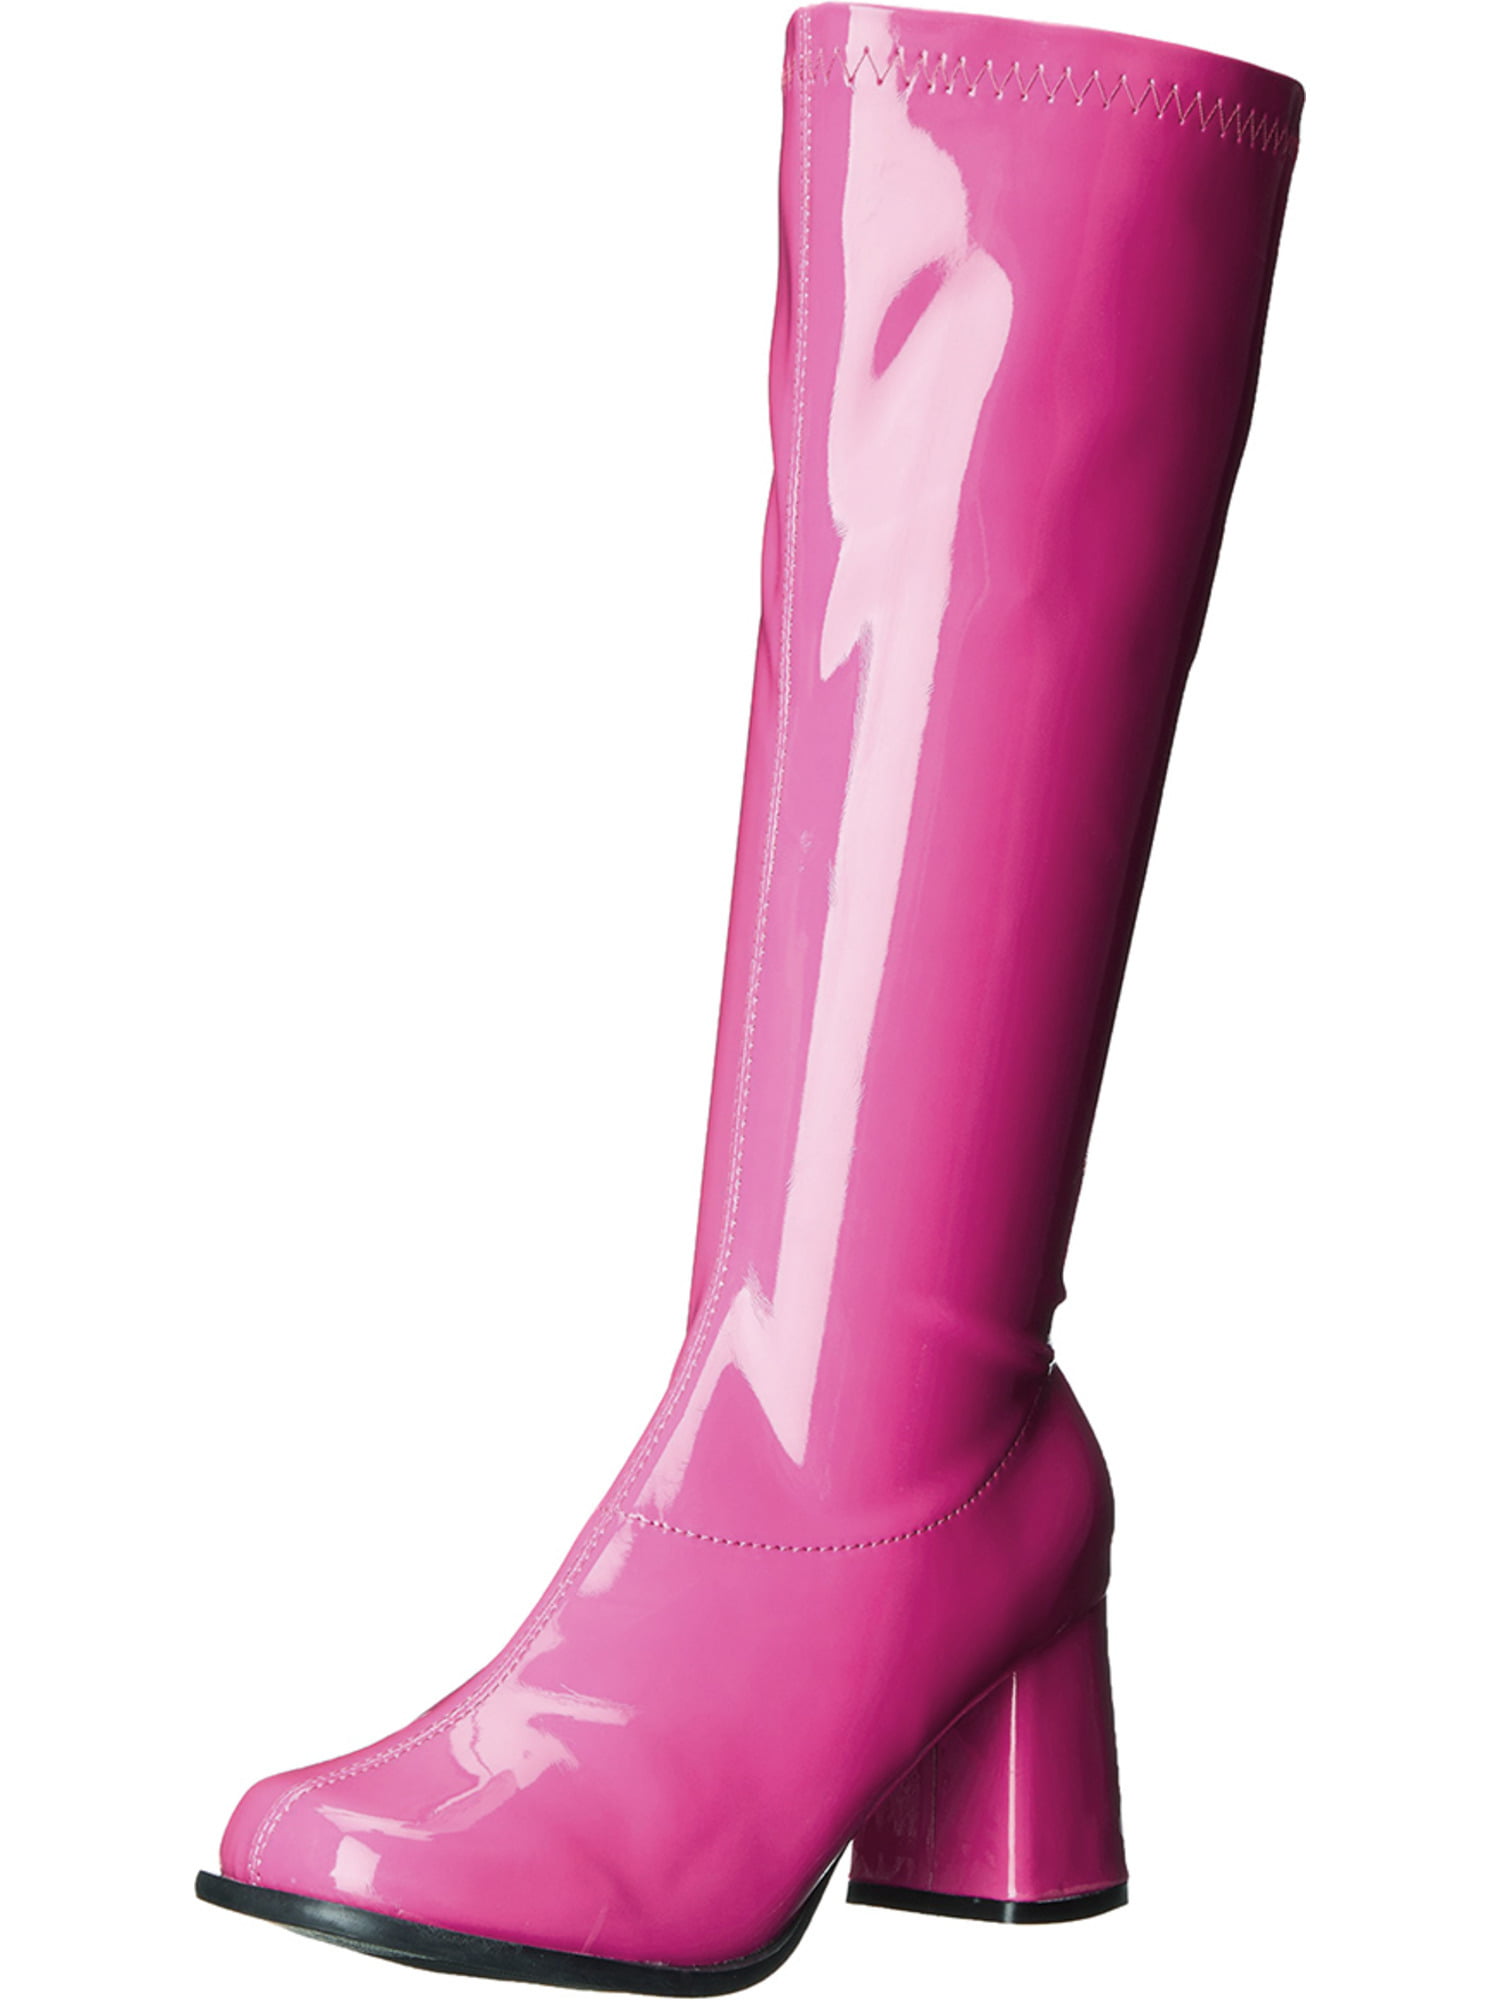 SummitFashions - 3 Inch Women's Sexy Gogo Boots Knee High Single Sole ...